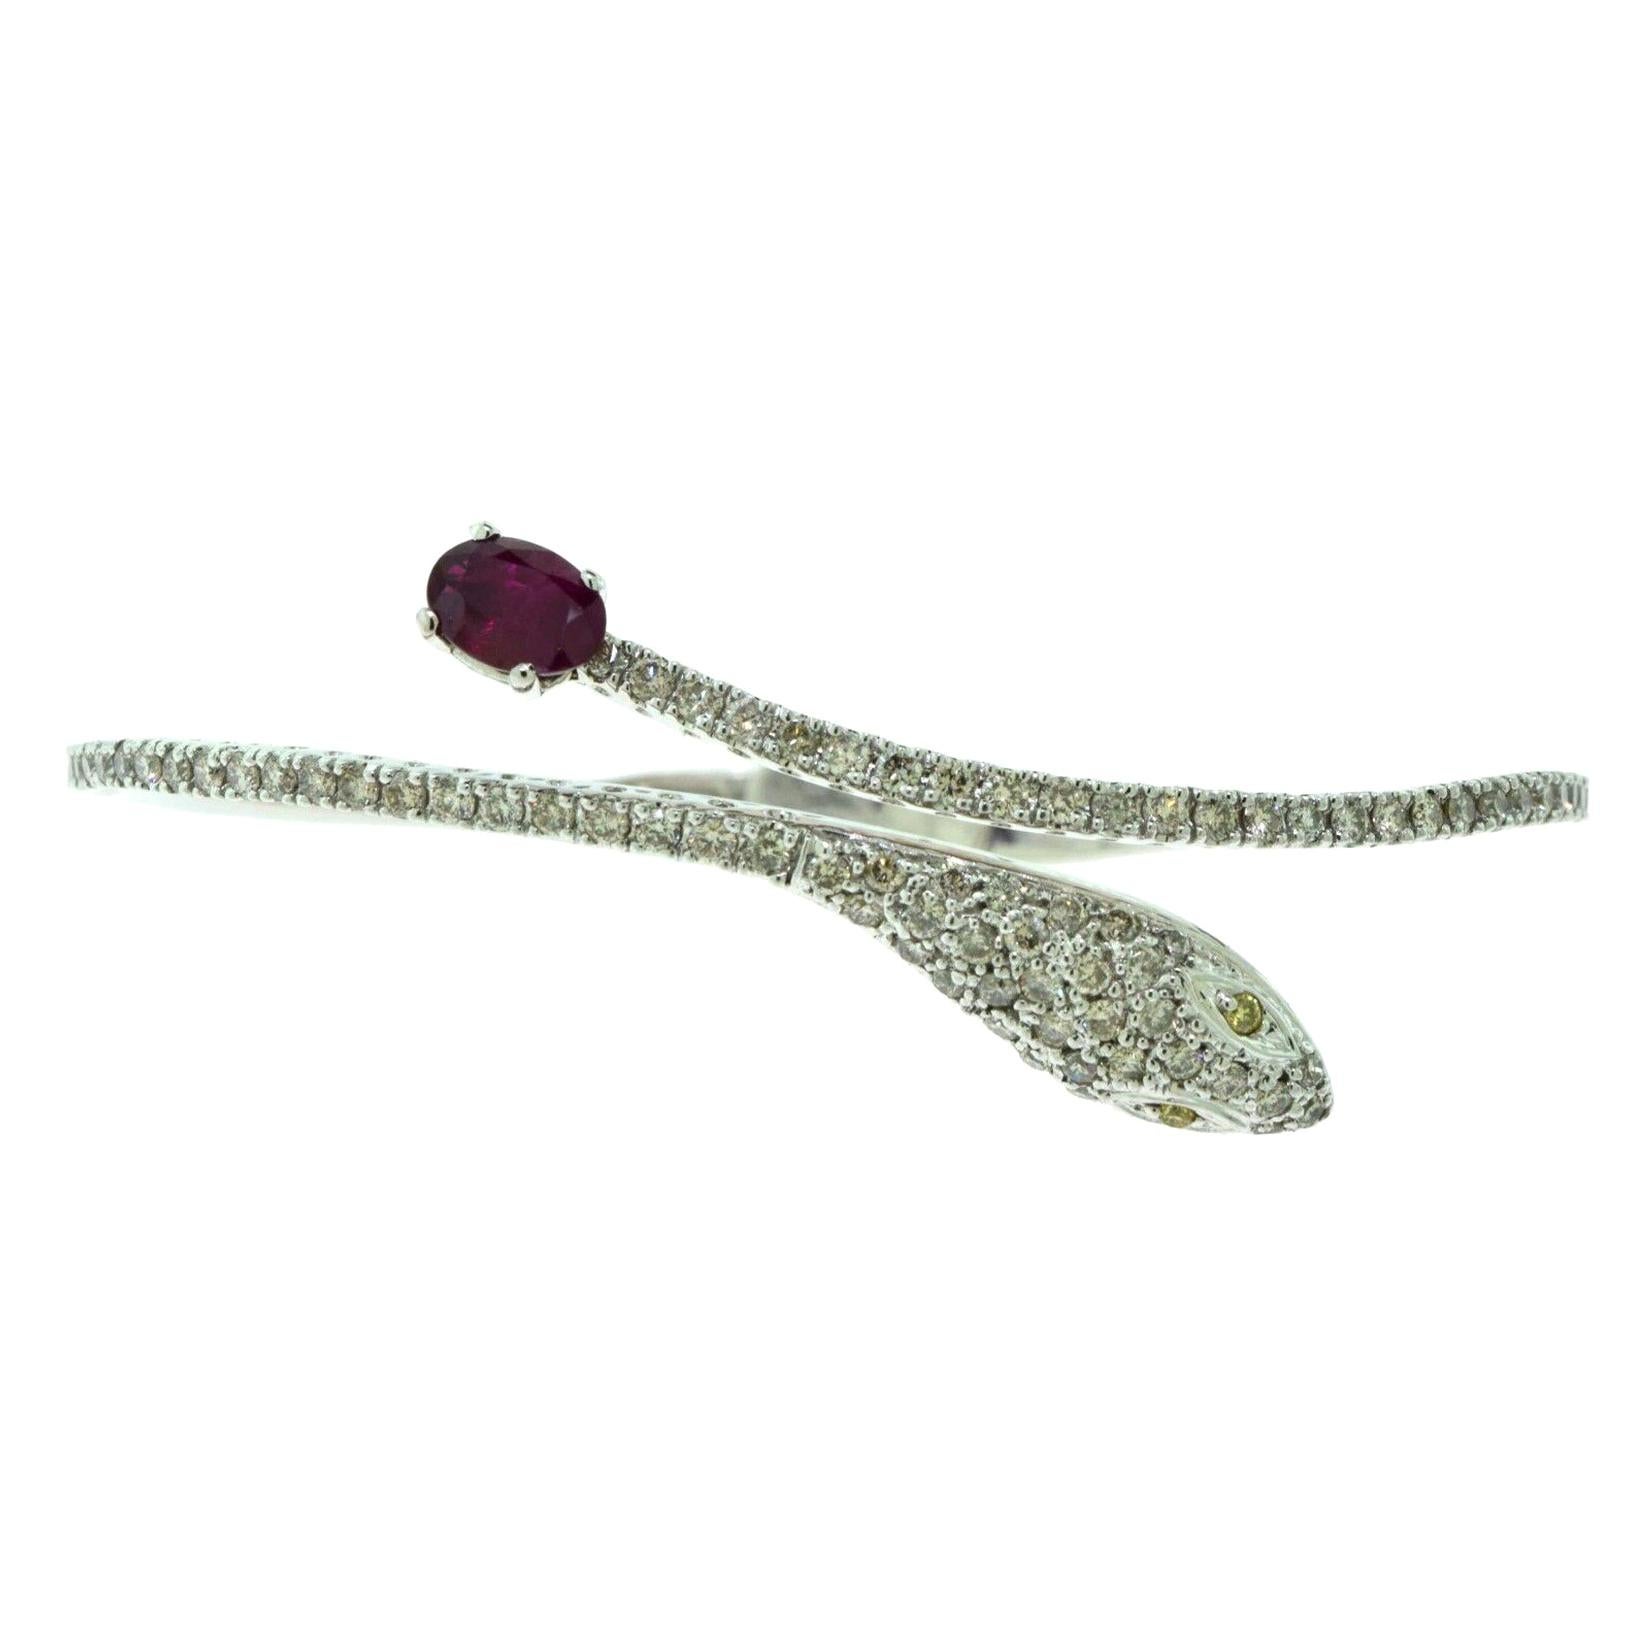 Snake Diamond Bracelet with Ruby Tail and Yellow Diamond Eyes